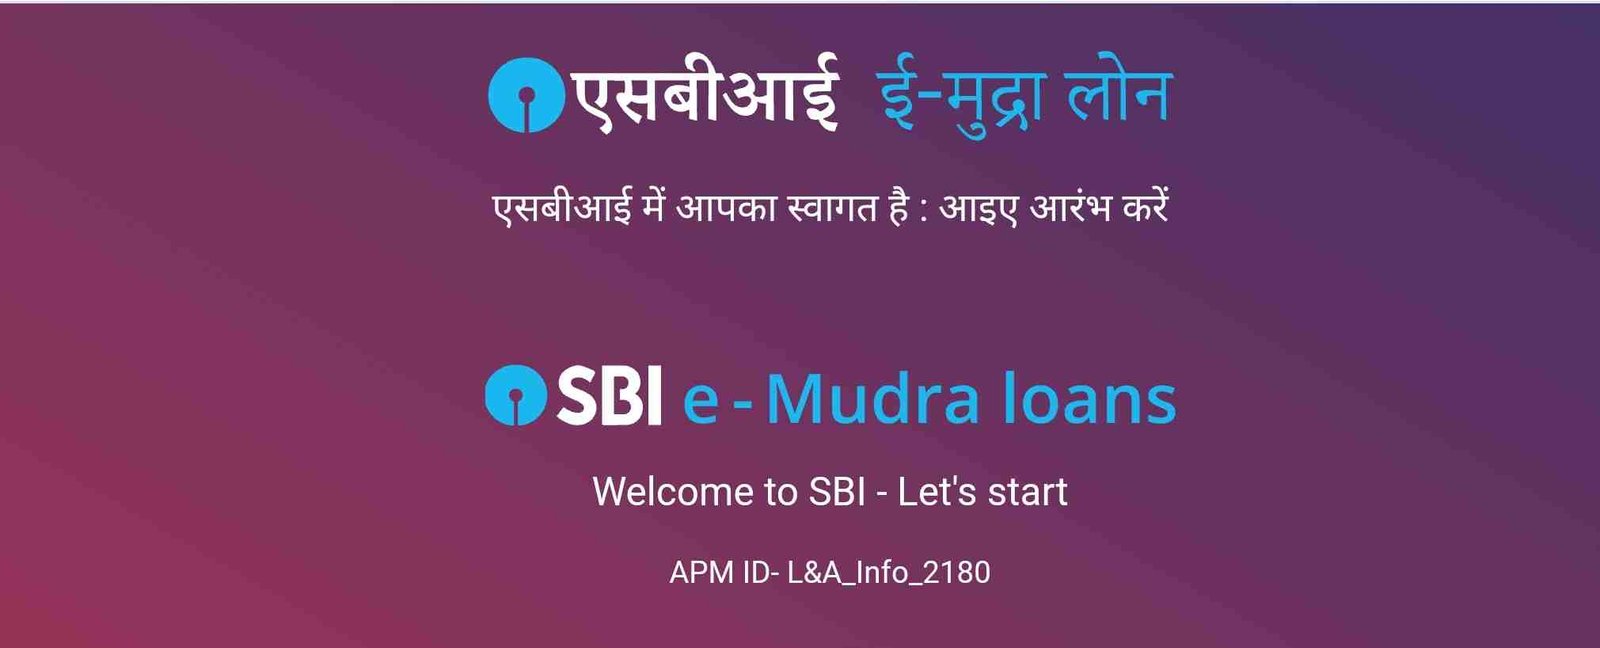 SBI Kishor Mudra Loan